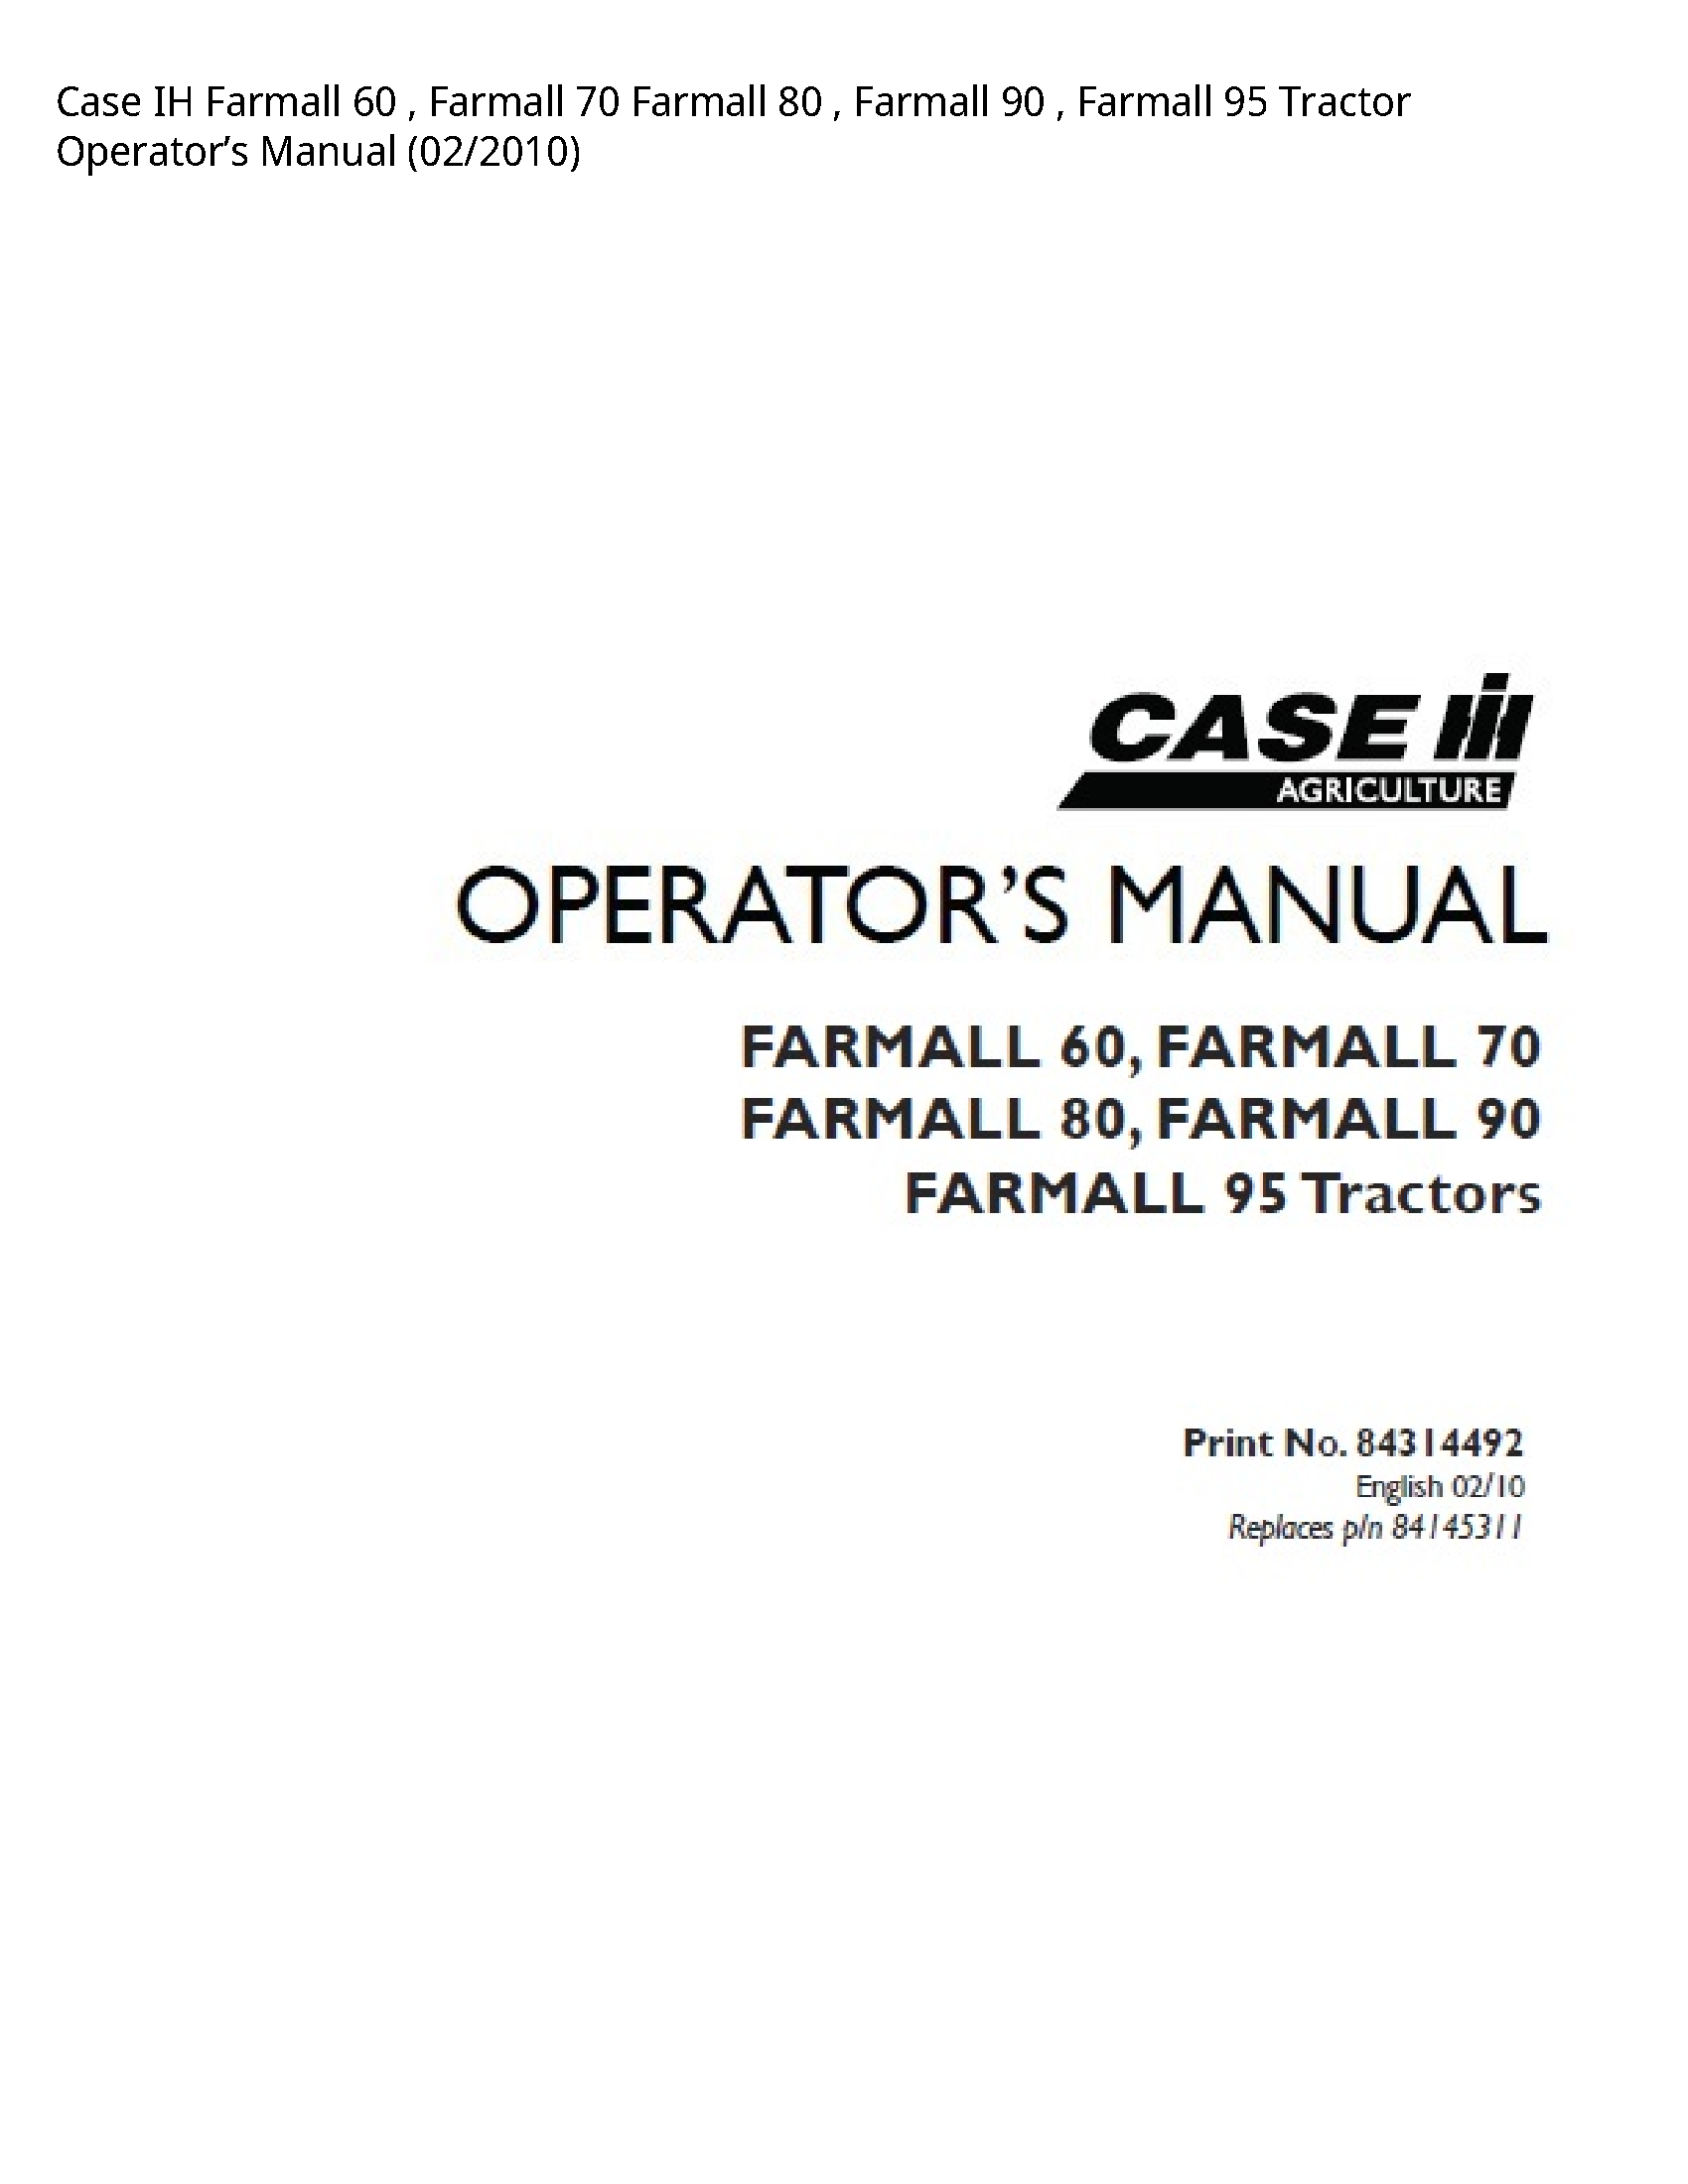 Case/Case IH 60 IH Farmall Farmall Farmall Farmall Farmall Tractor Operator’s manual